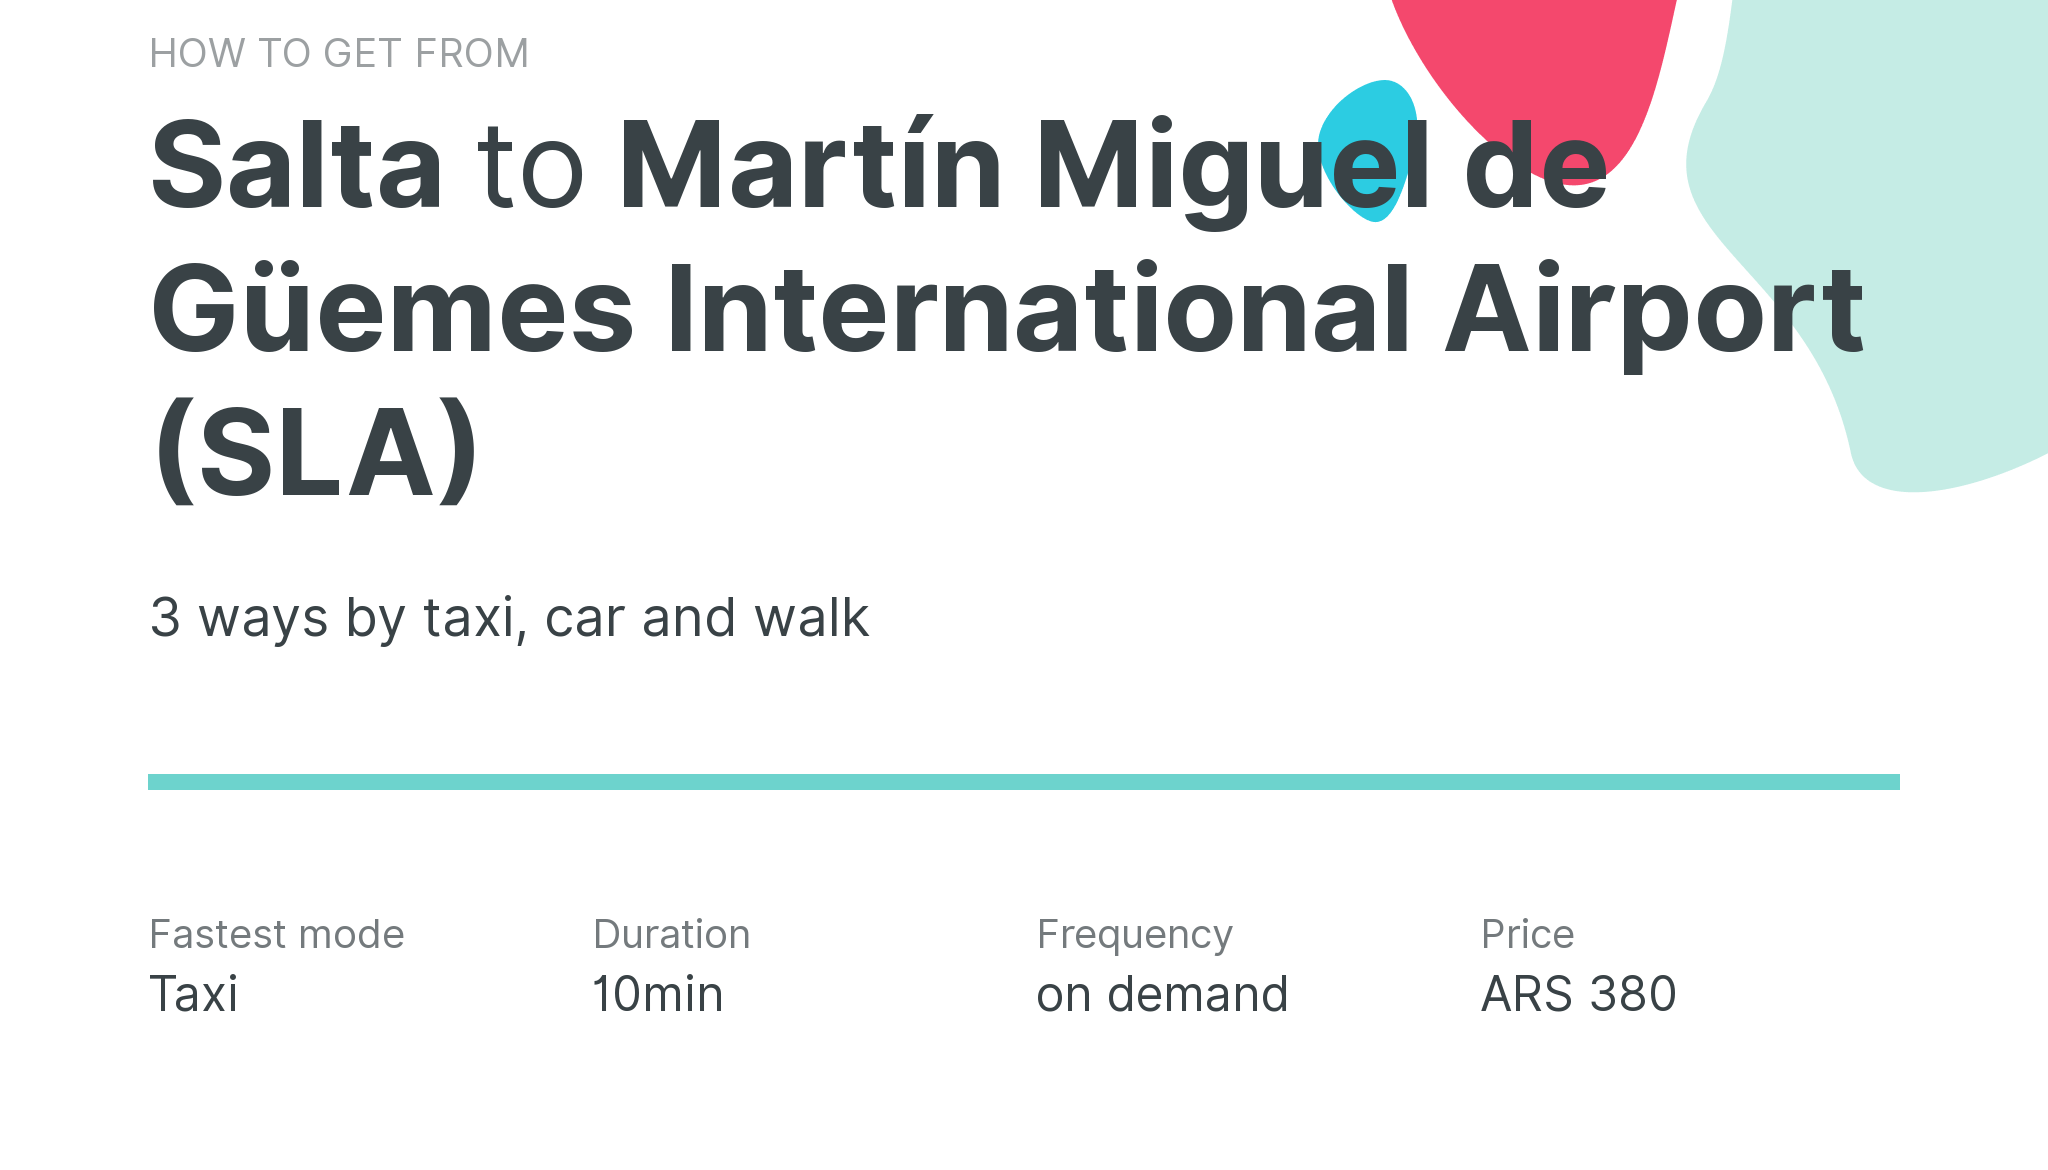 How do I get from Salta to Martín Miguel de Güemes International Airport (SLA)